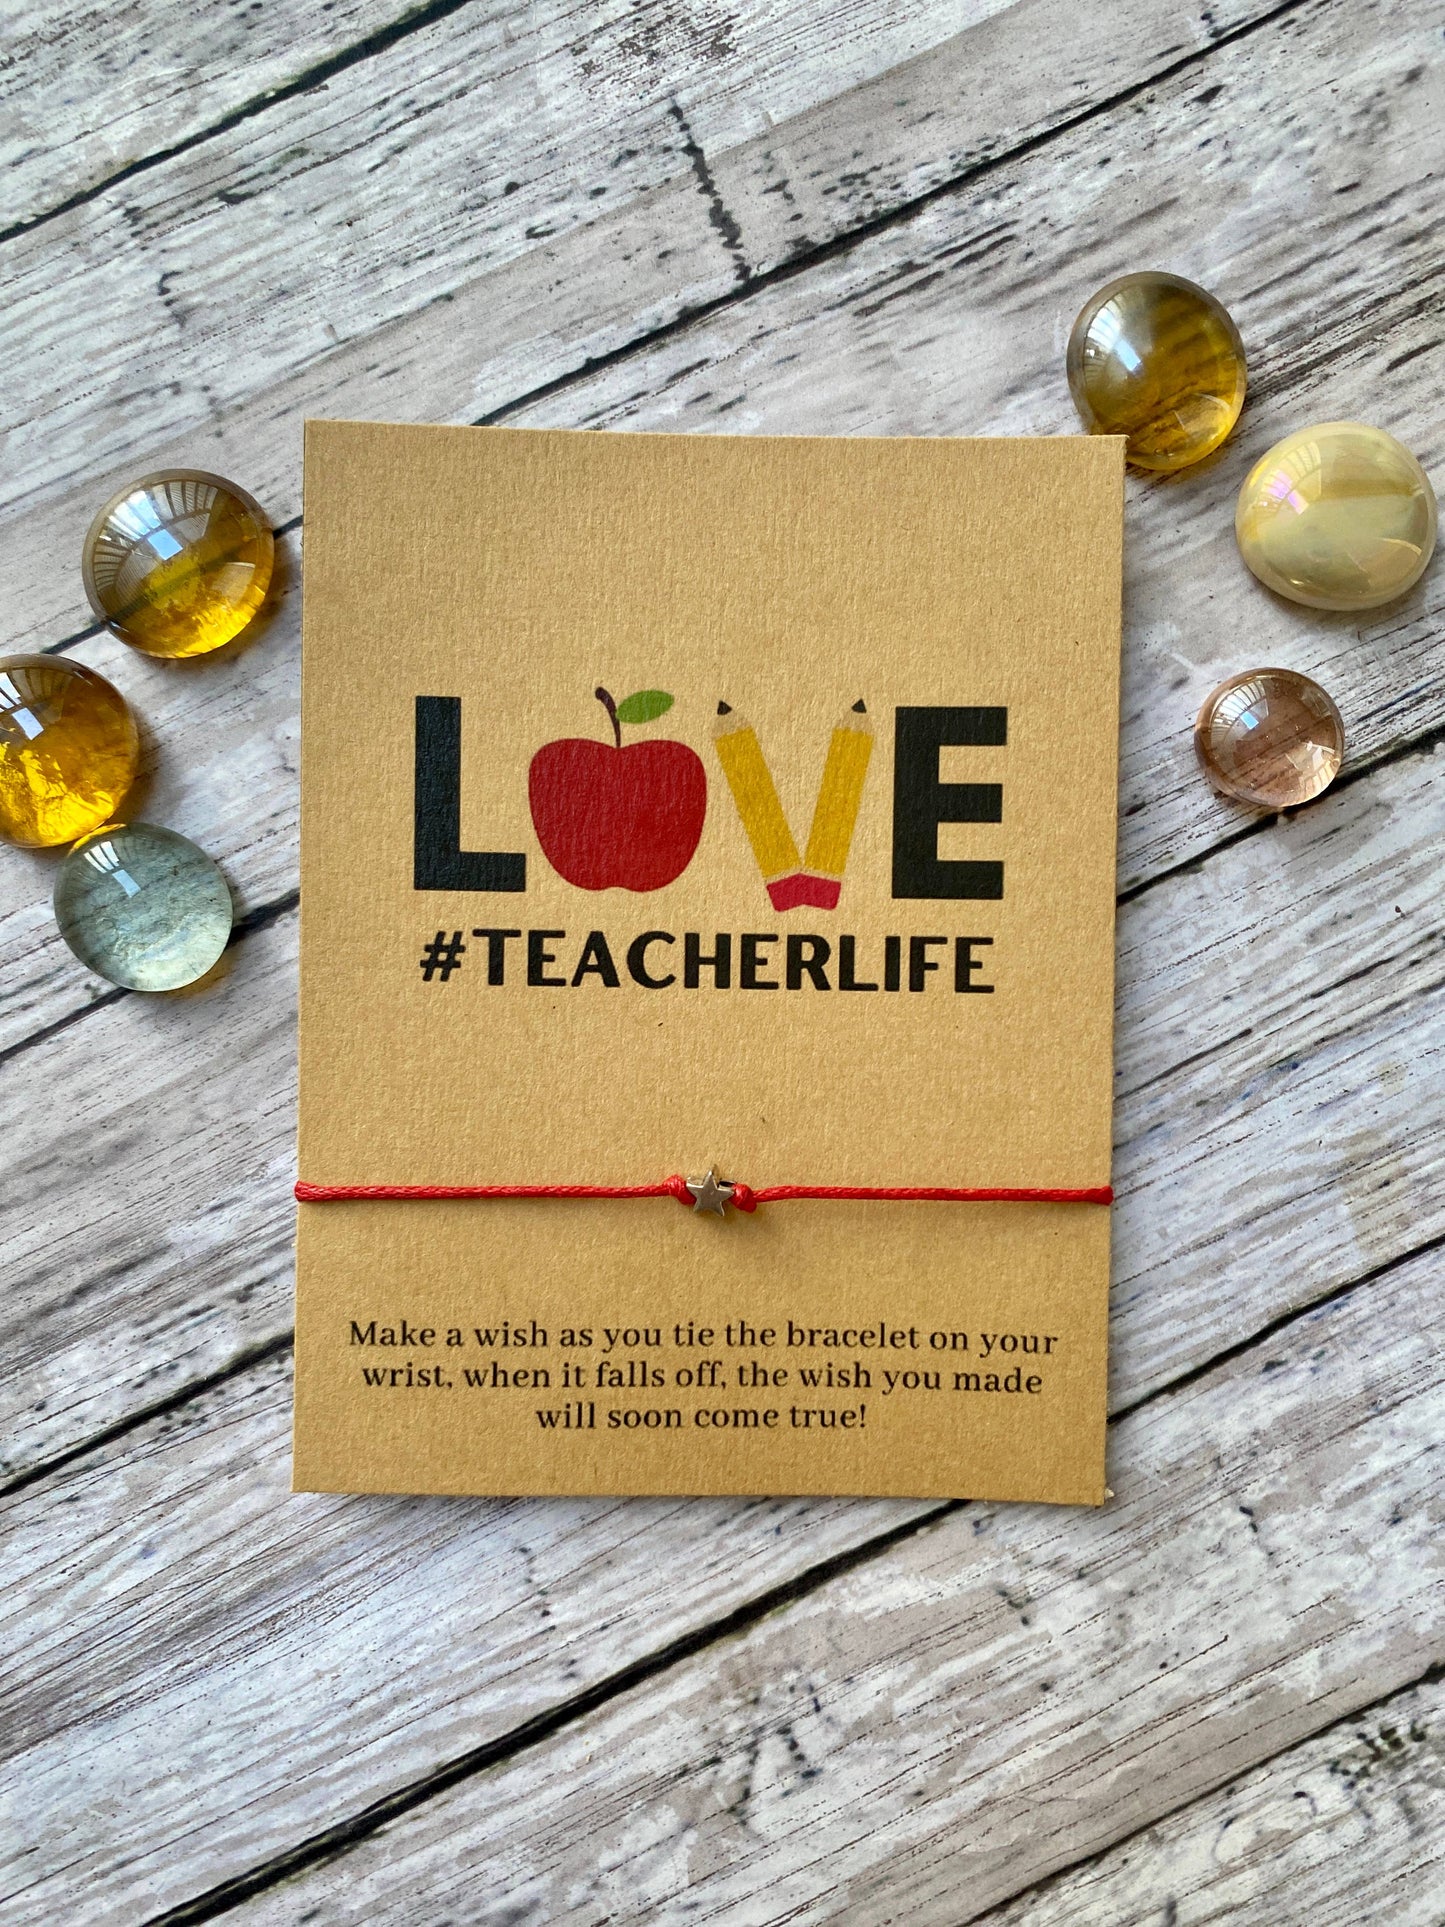 Love, Teacherlife